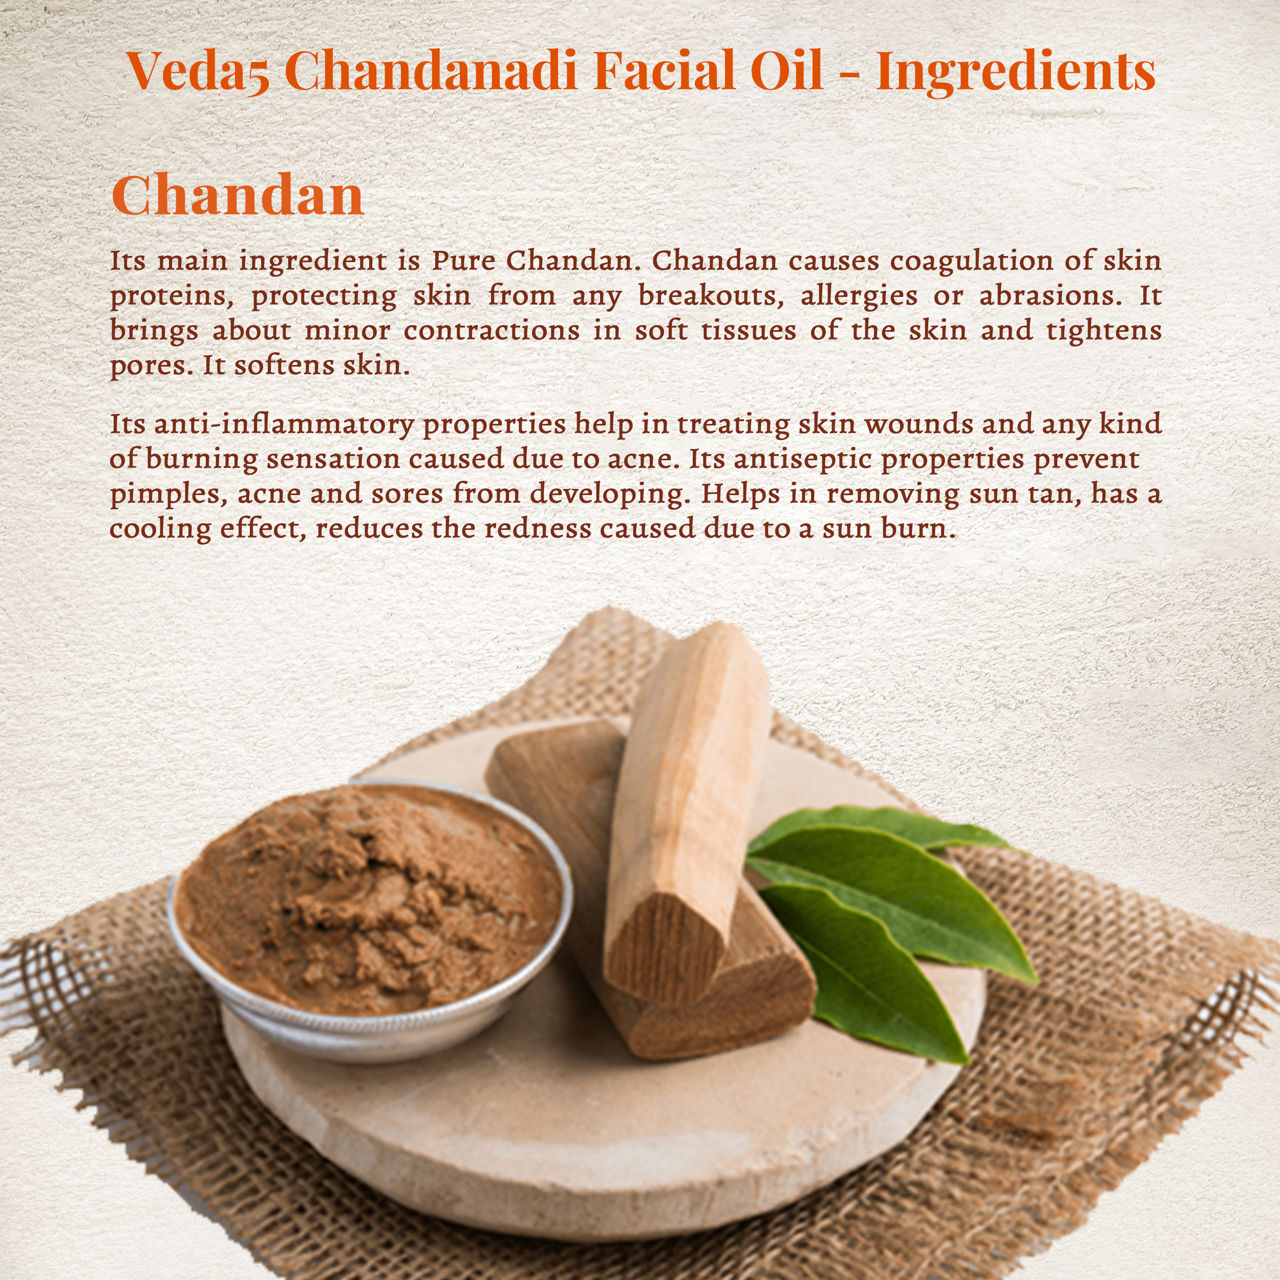 Chandanadi Facial Oil Ingredients 1 Veda5 Himalayan Naturals